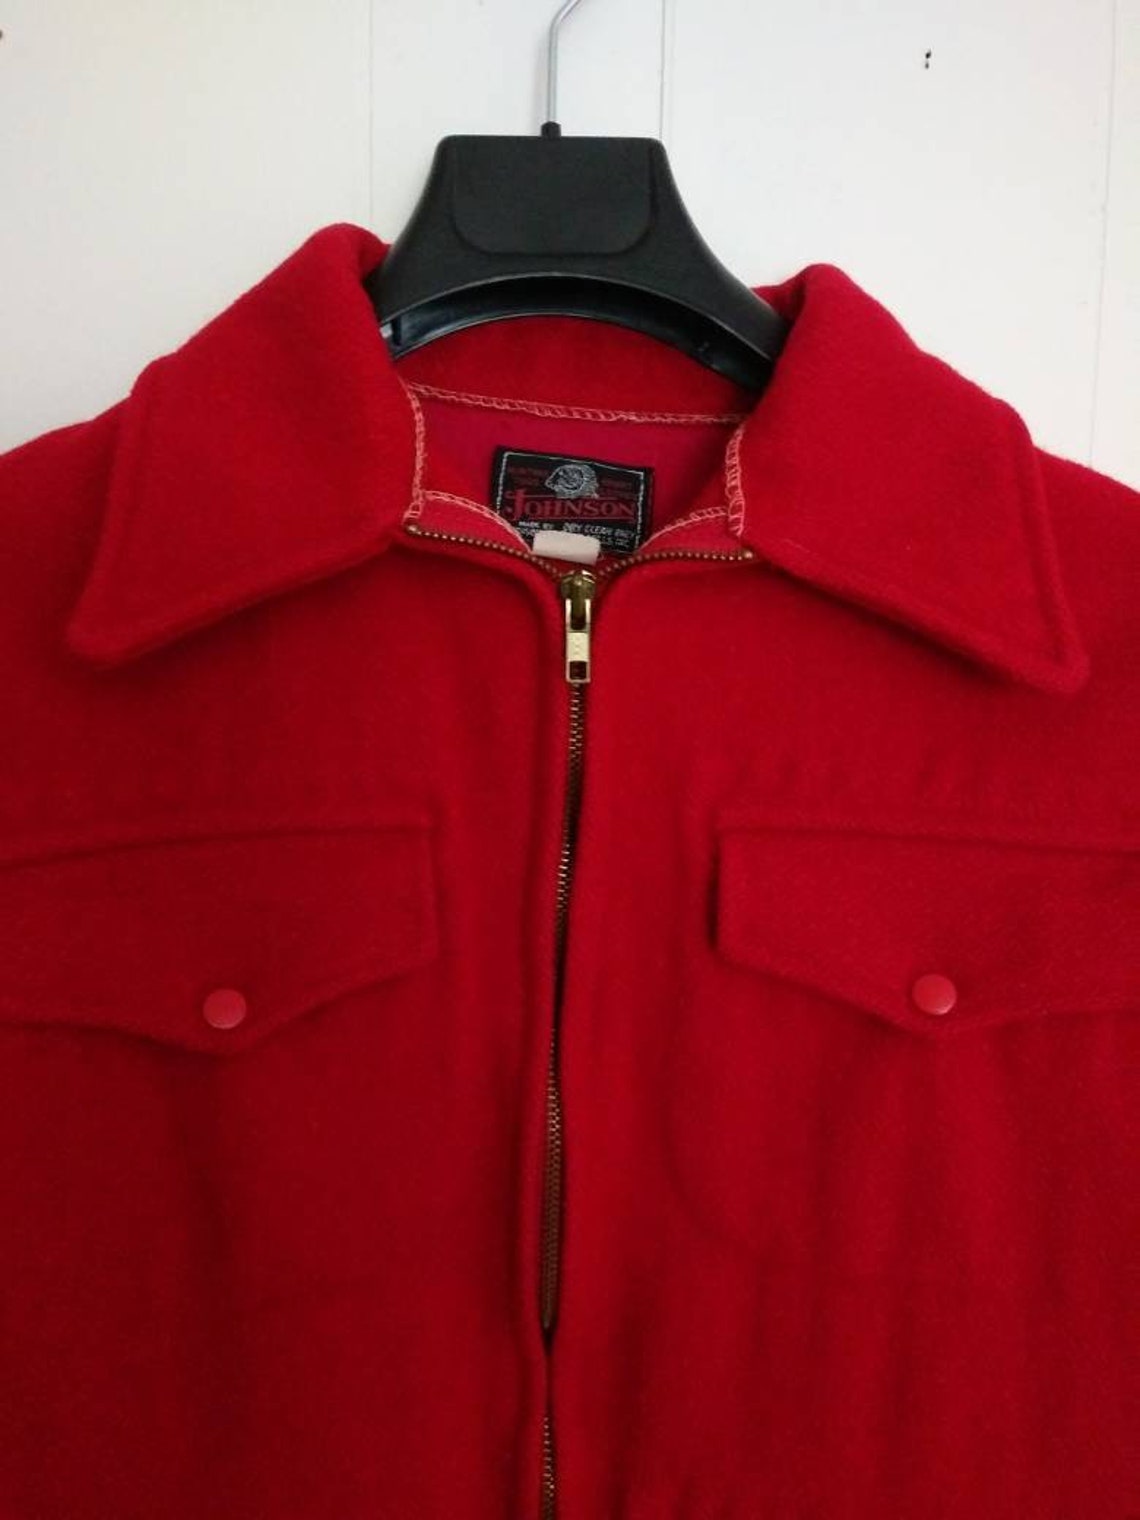 1950s Vintage Rockabilly Johnson Woolen Mills Red Hunting | Etsy